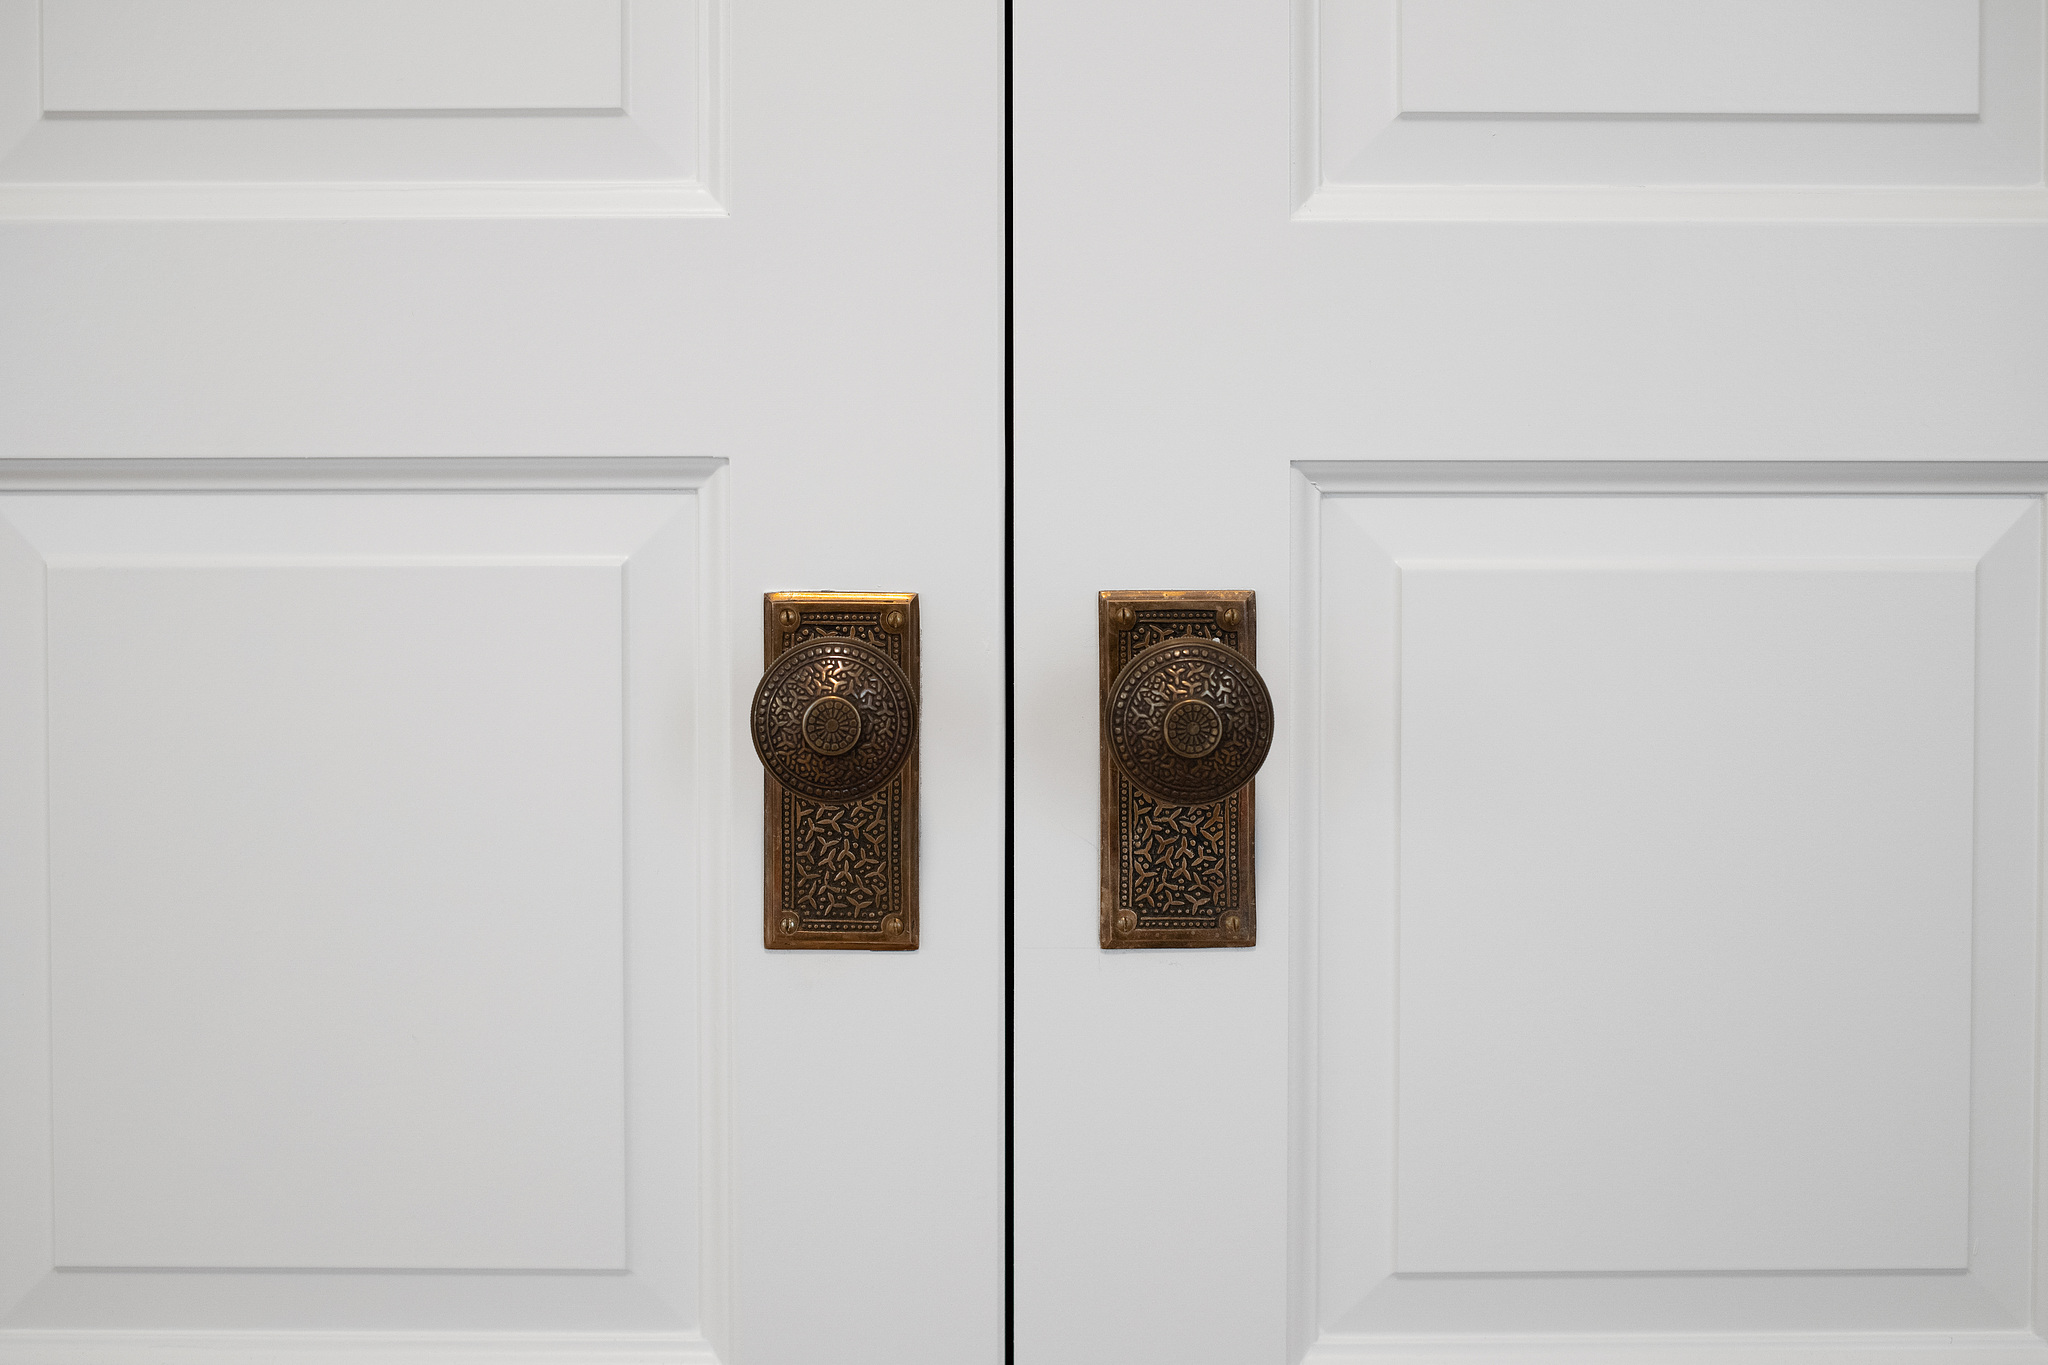 Replica door nobs recreated to match the original architecture